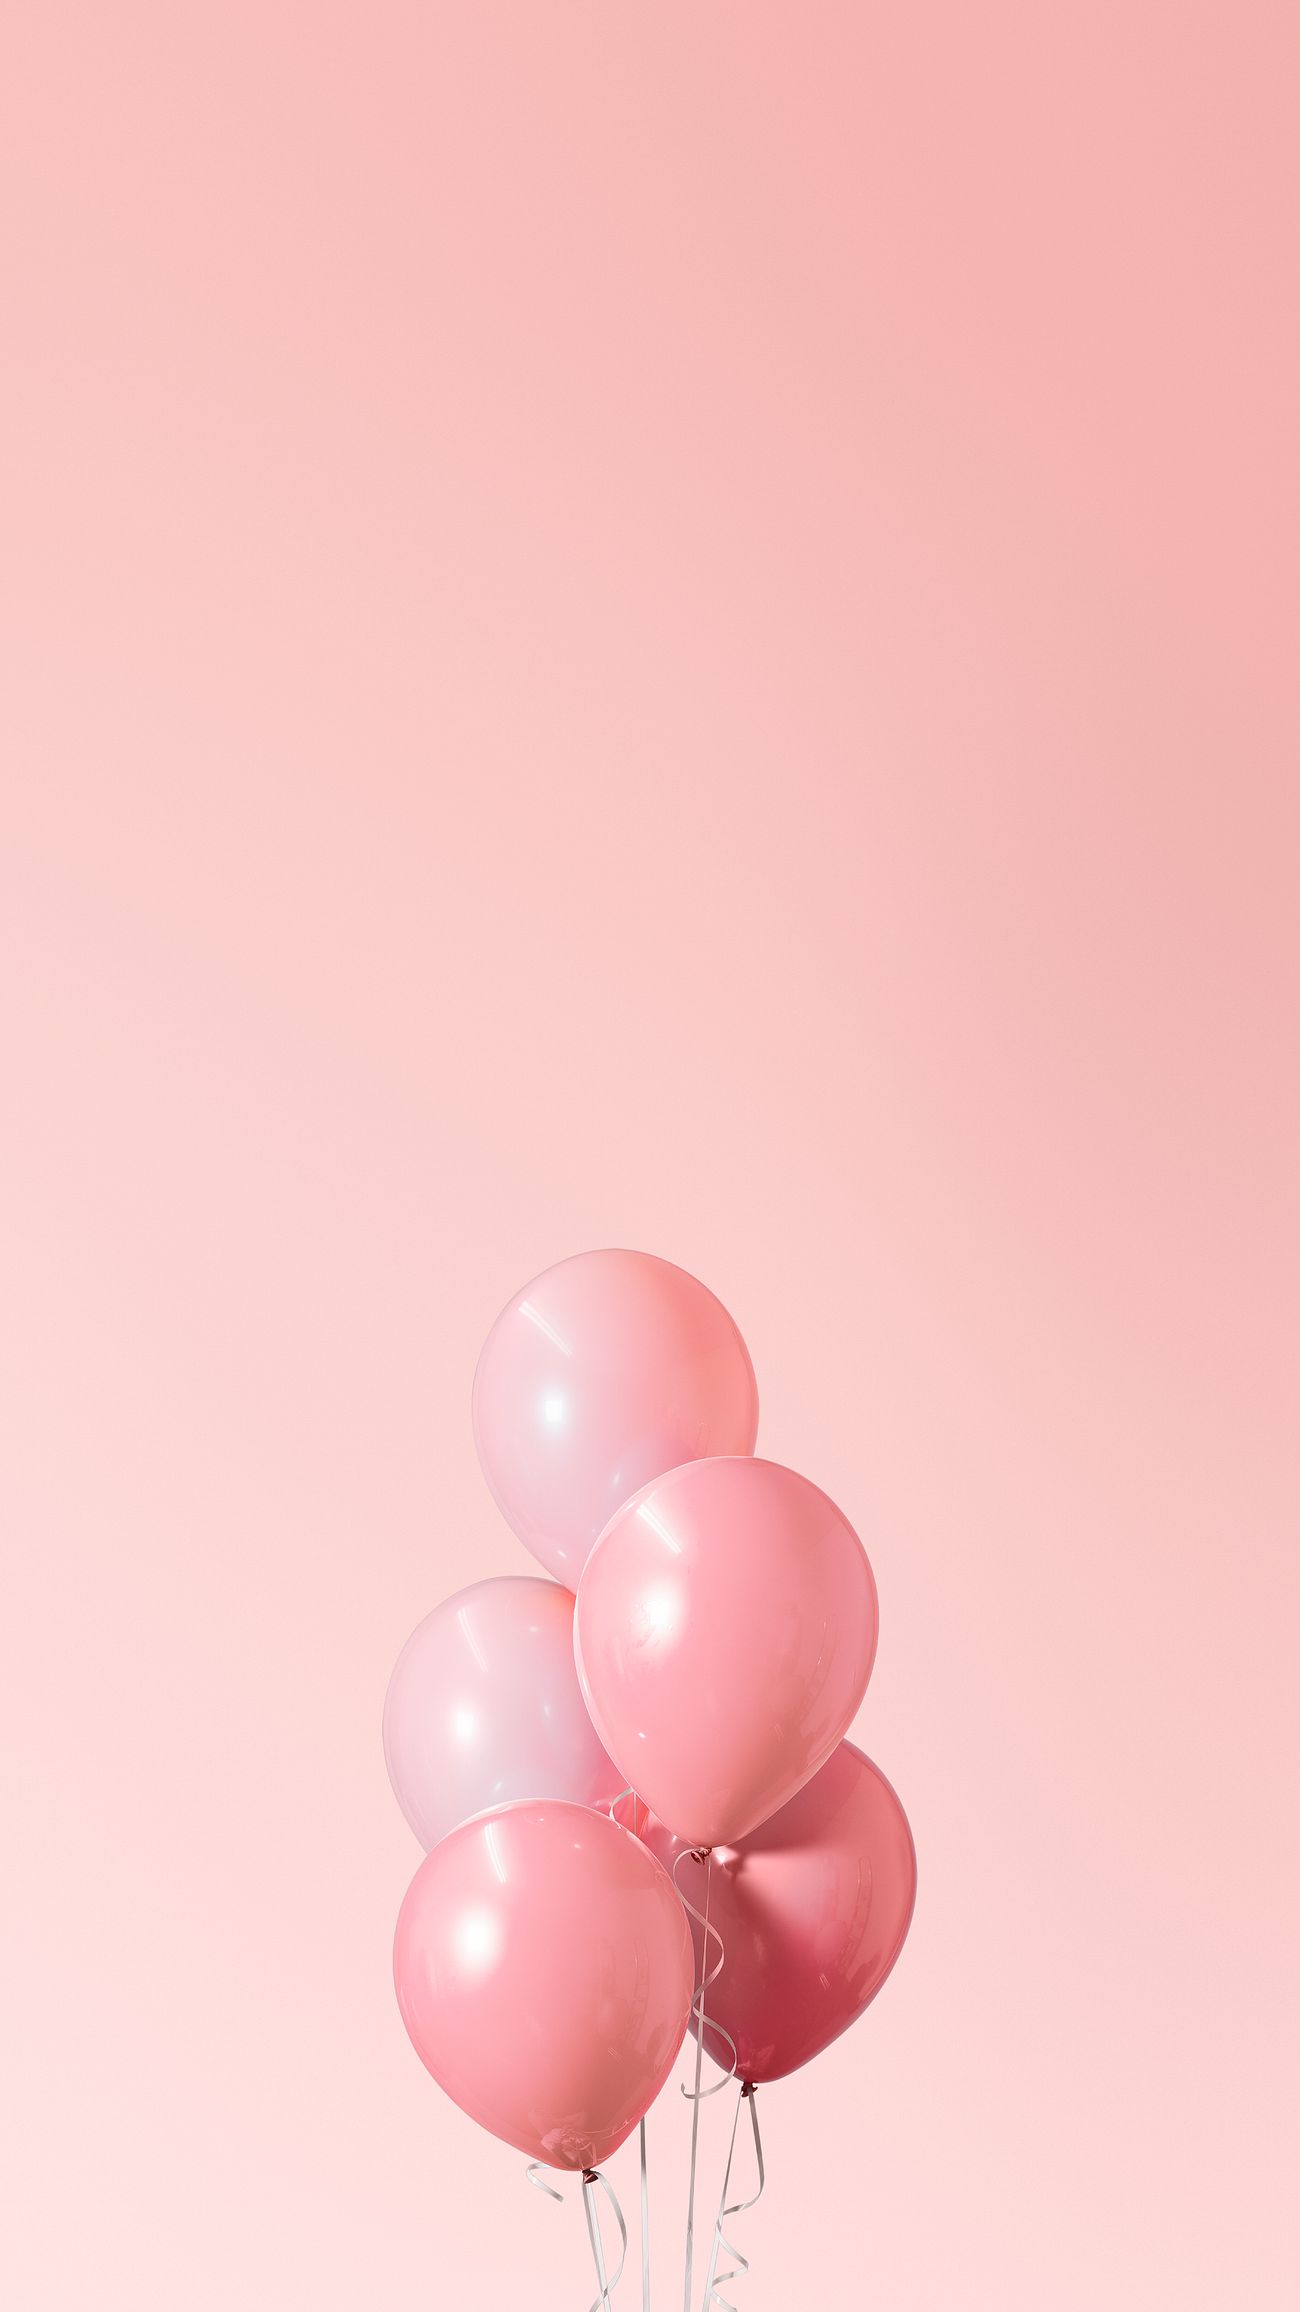 Pastel balloons phone background | Royalty free illustration - 1224746